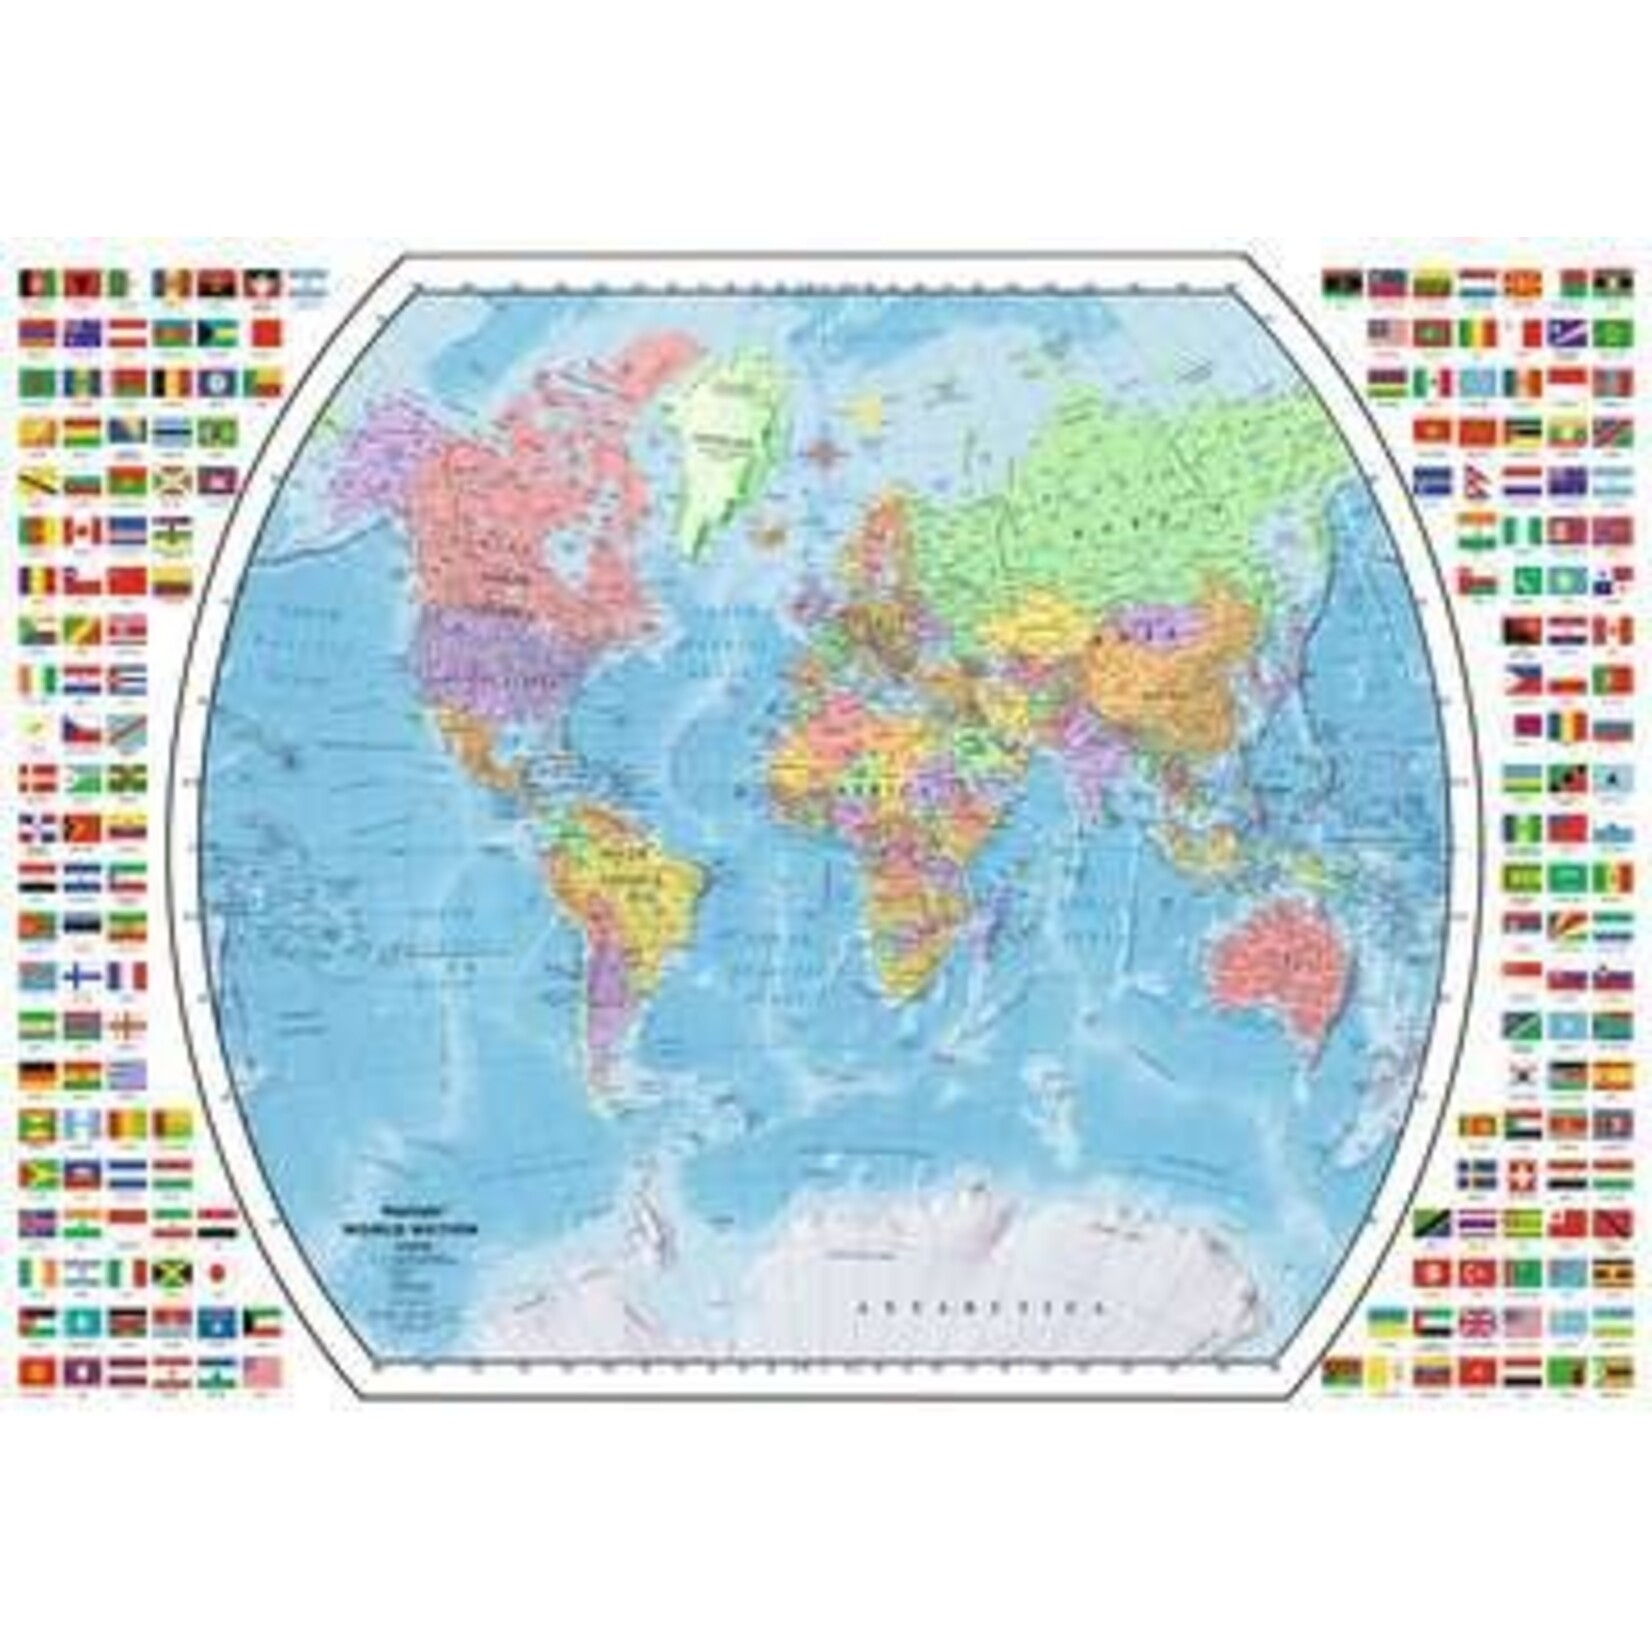 Ravensburger Political World Map